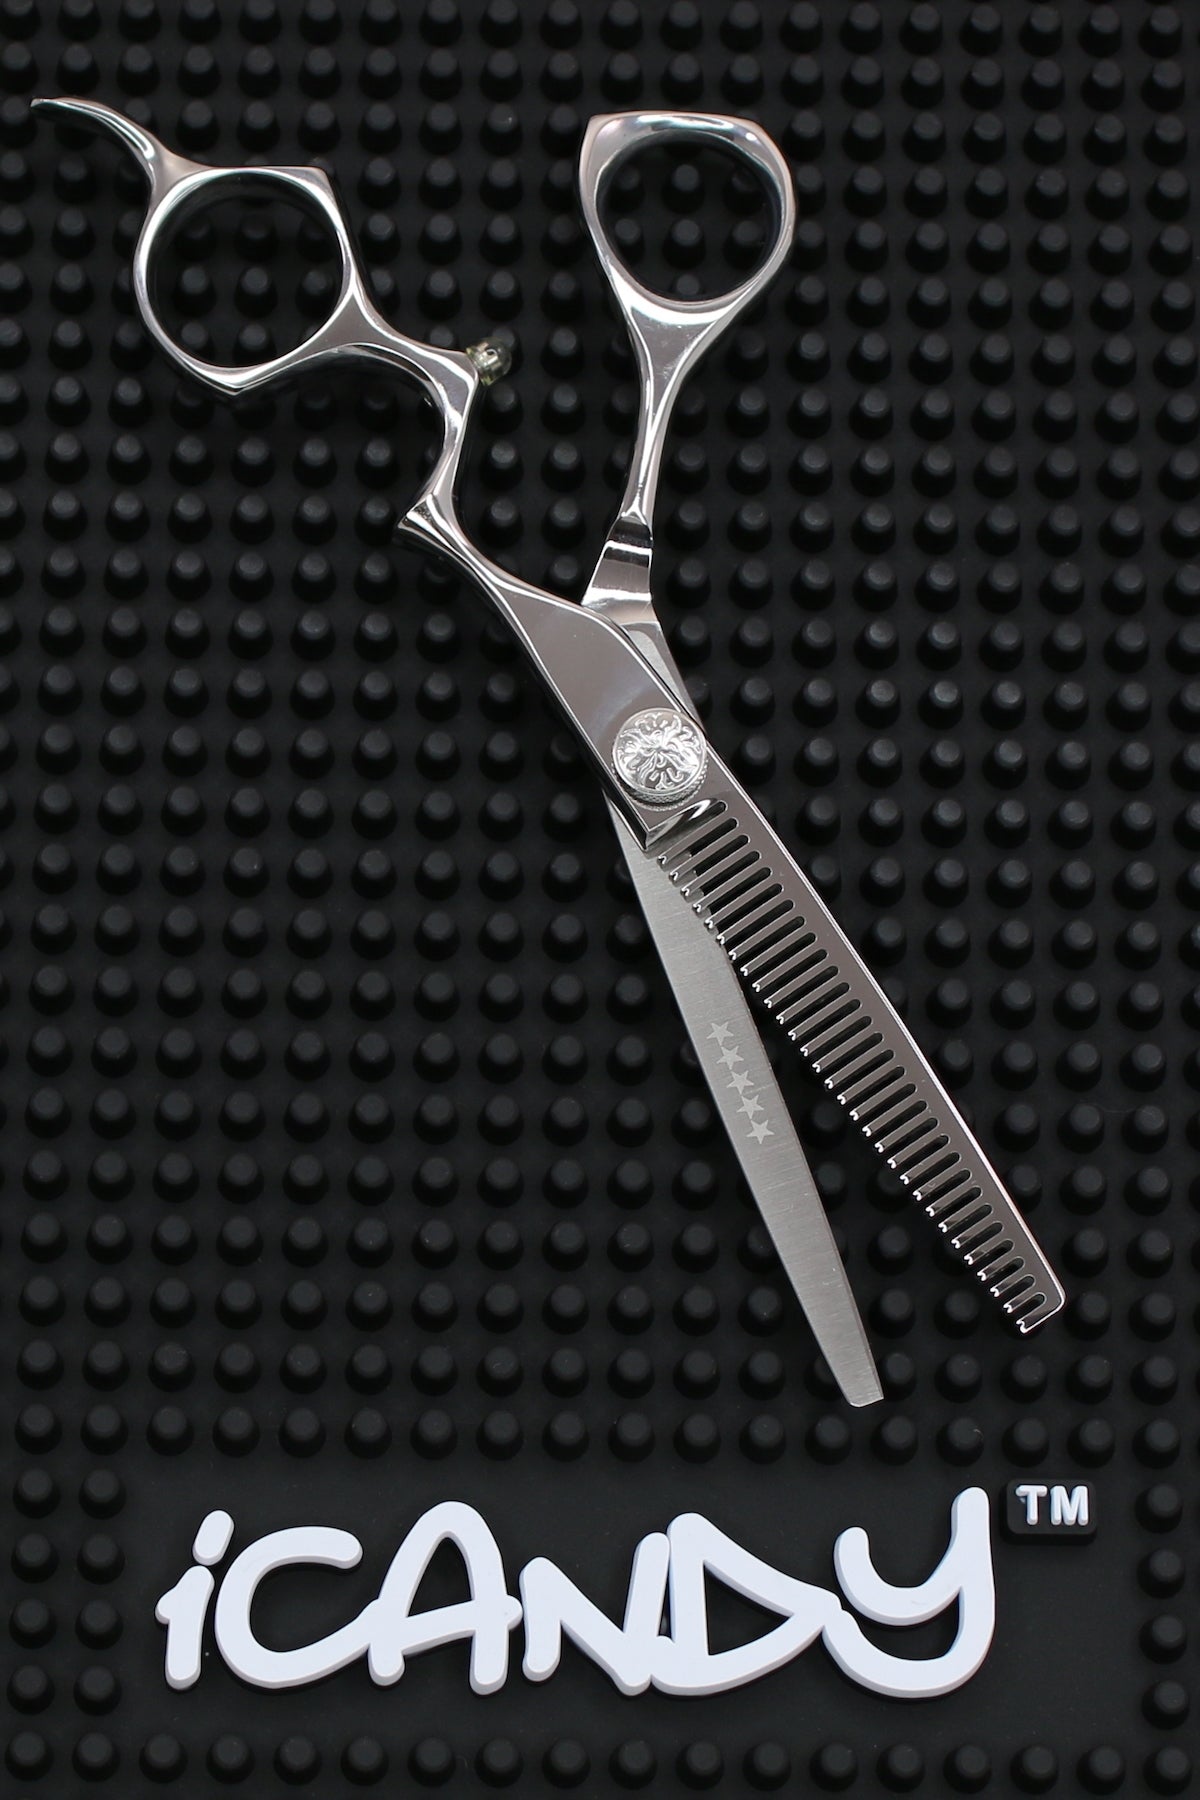 iCandy Goddess Athena-CT Thinning Scissors (6 inch) - iCandy Scissors